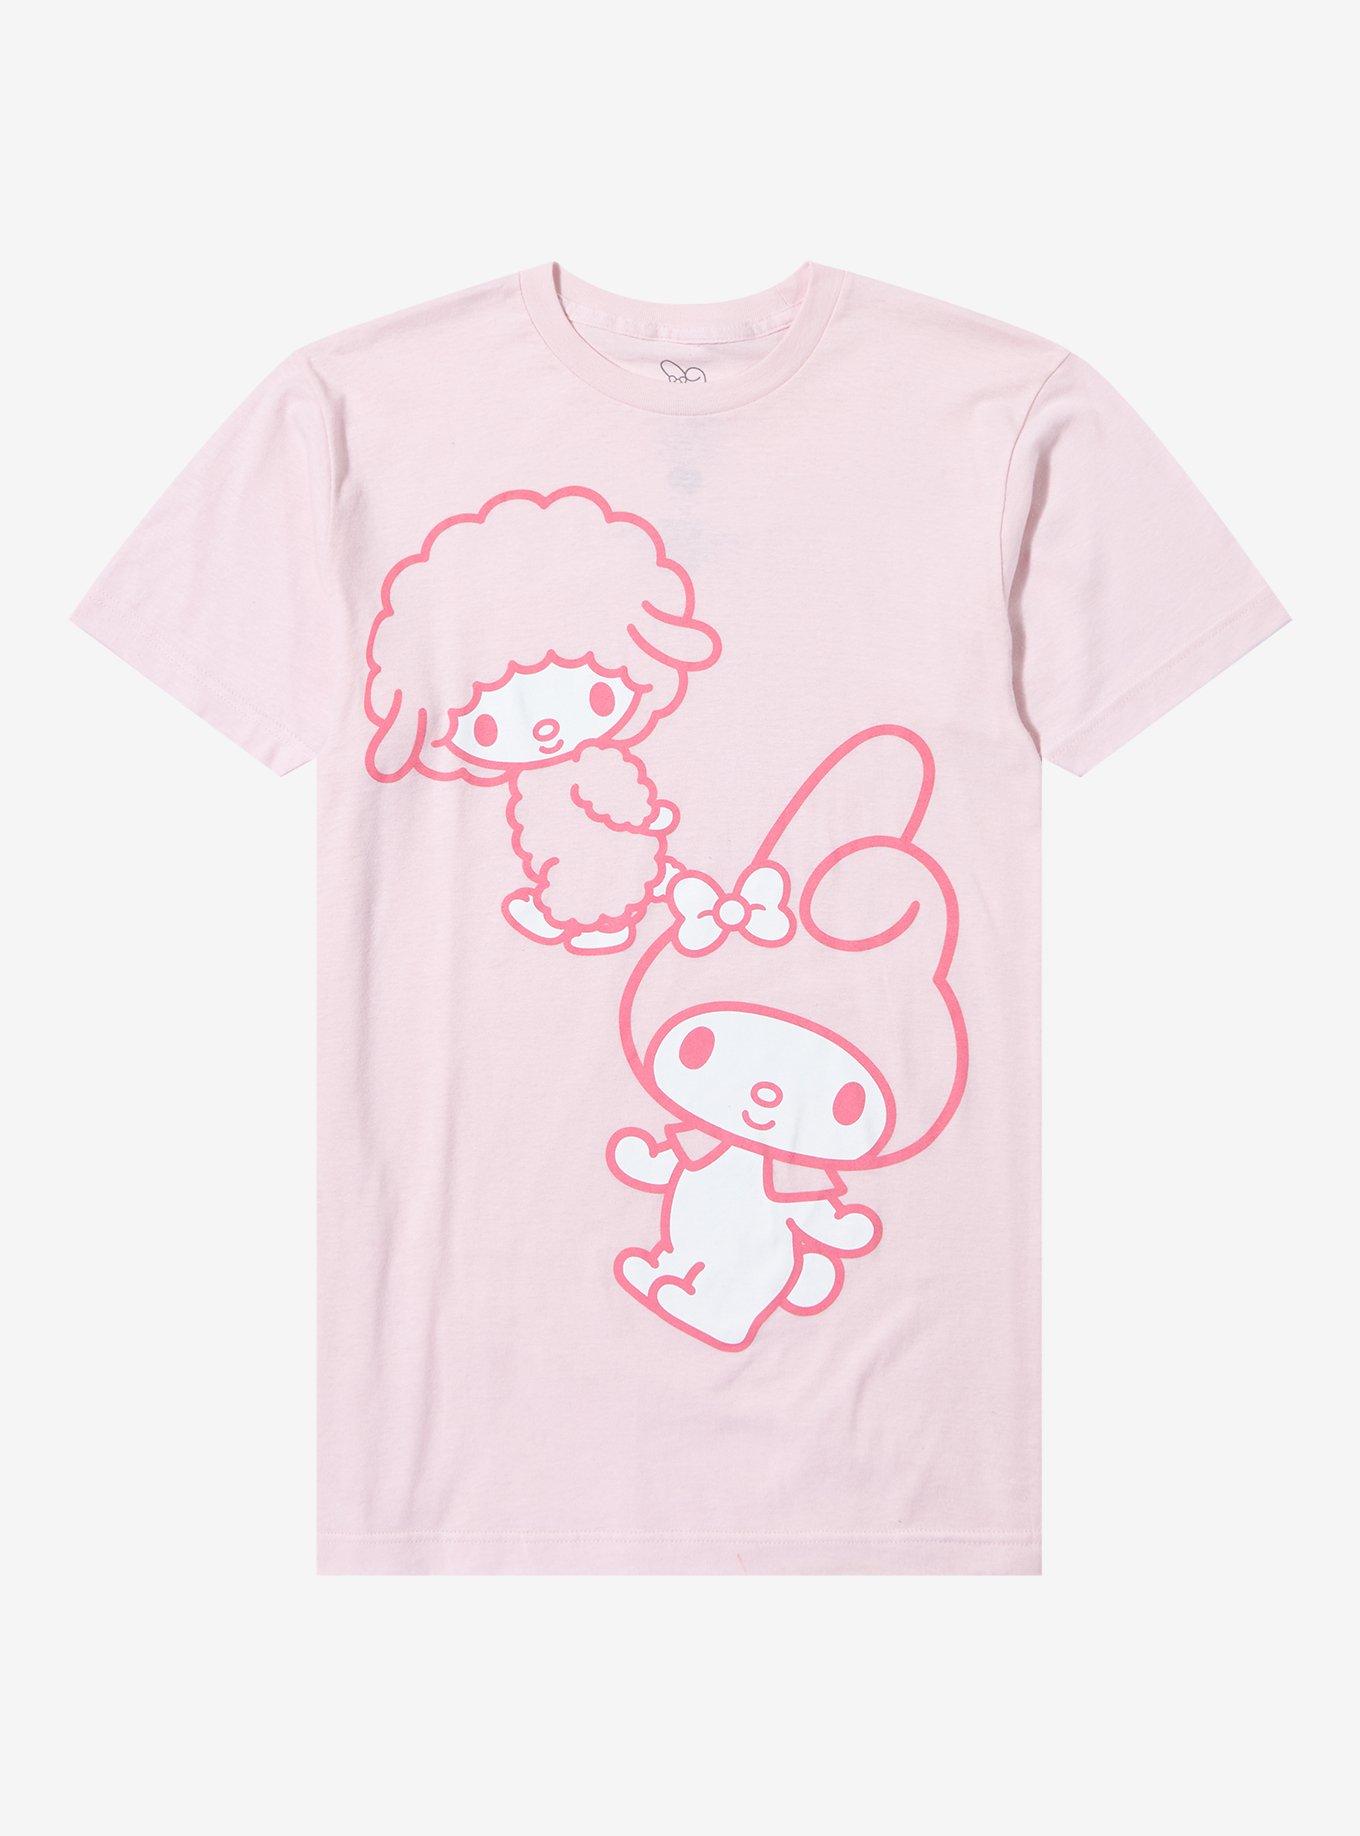 My Melody & My Sweet Piano Pastel Pink Boyfriend Fit Girls T-Shirt